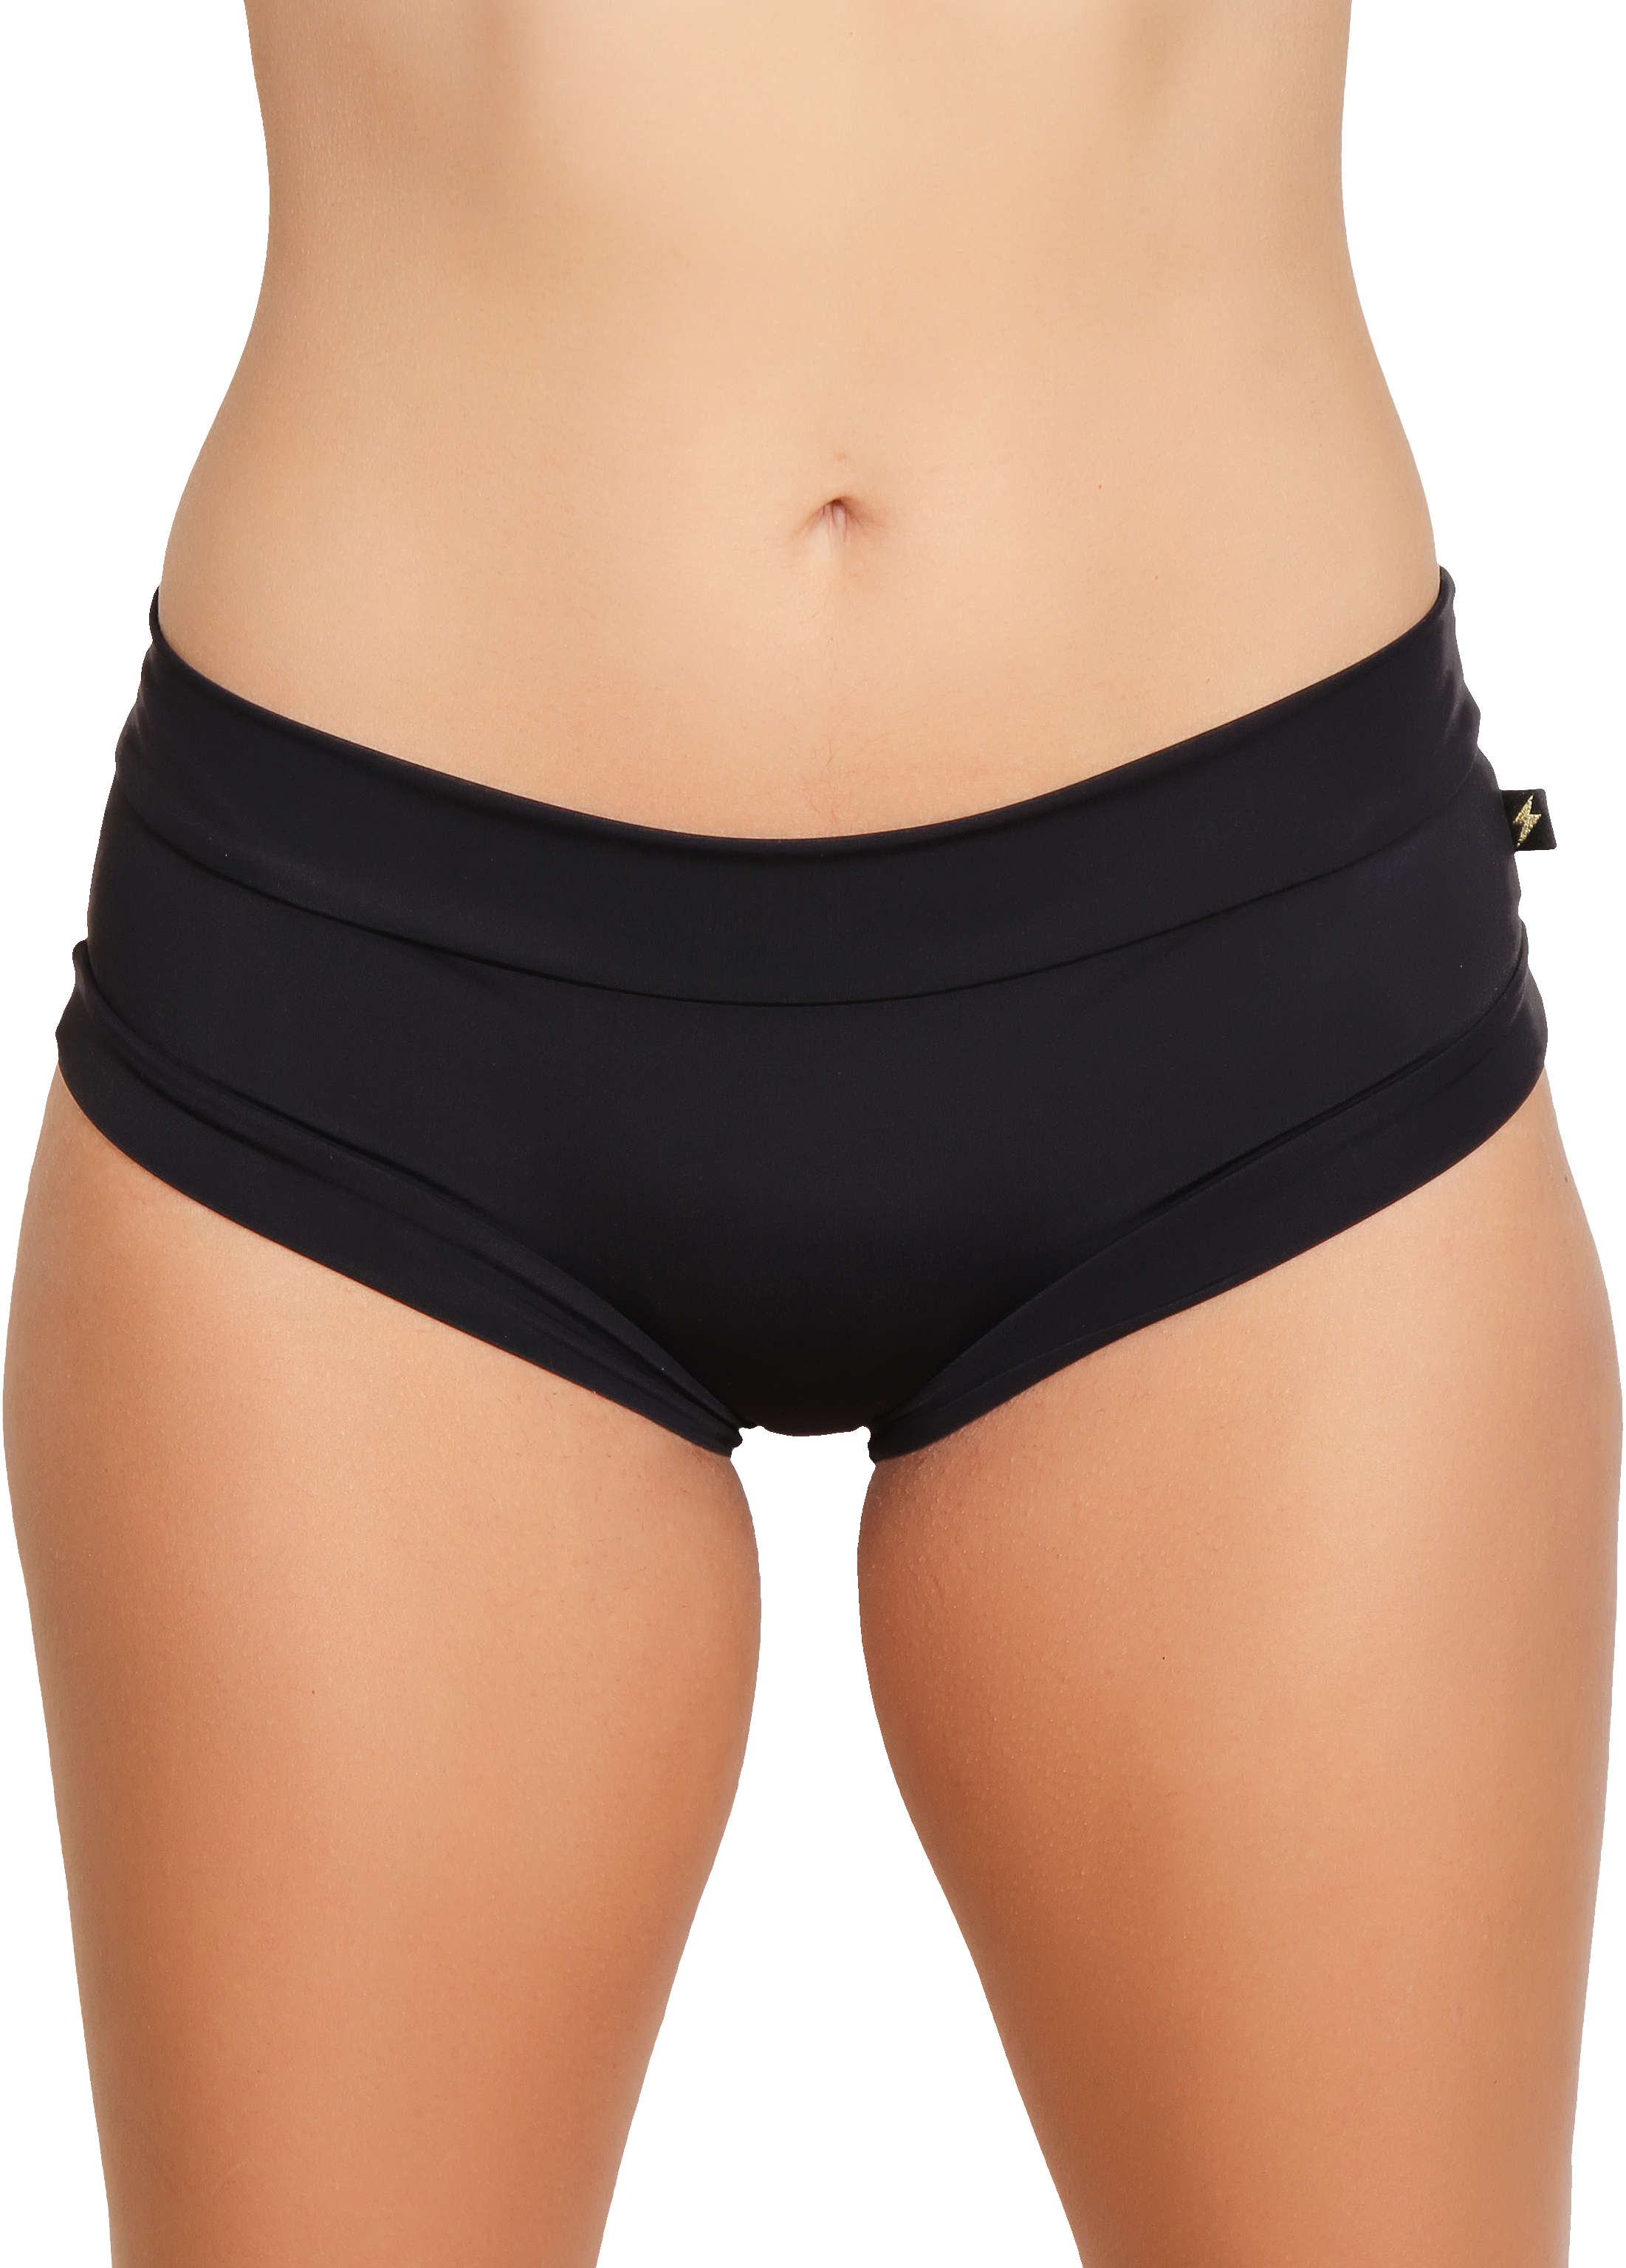 Women Sexy PU Leather Shorts Casual High Waist Wet Look Black Hot Pants  Clubwear | eBay